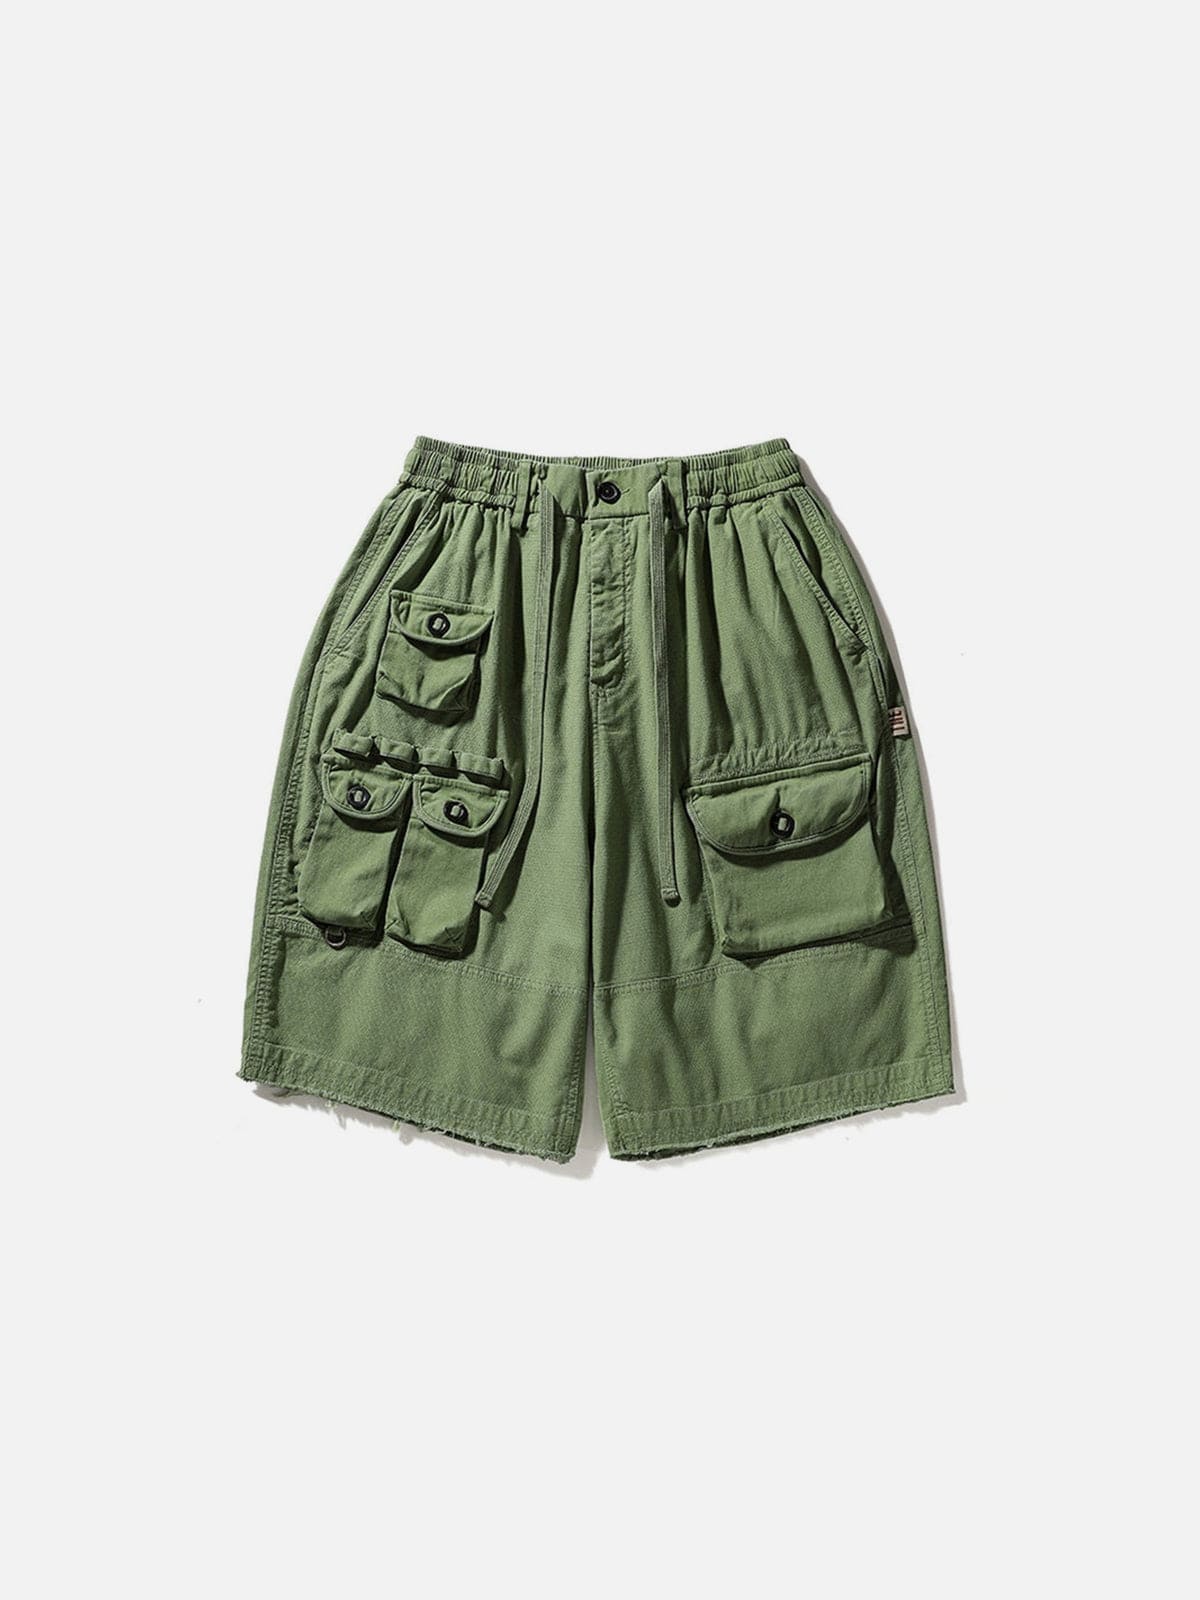 Multi Pockets Cargo Shorts Streetwear Brand Techwear Combat Tactical YUGEN THEORY